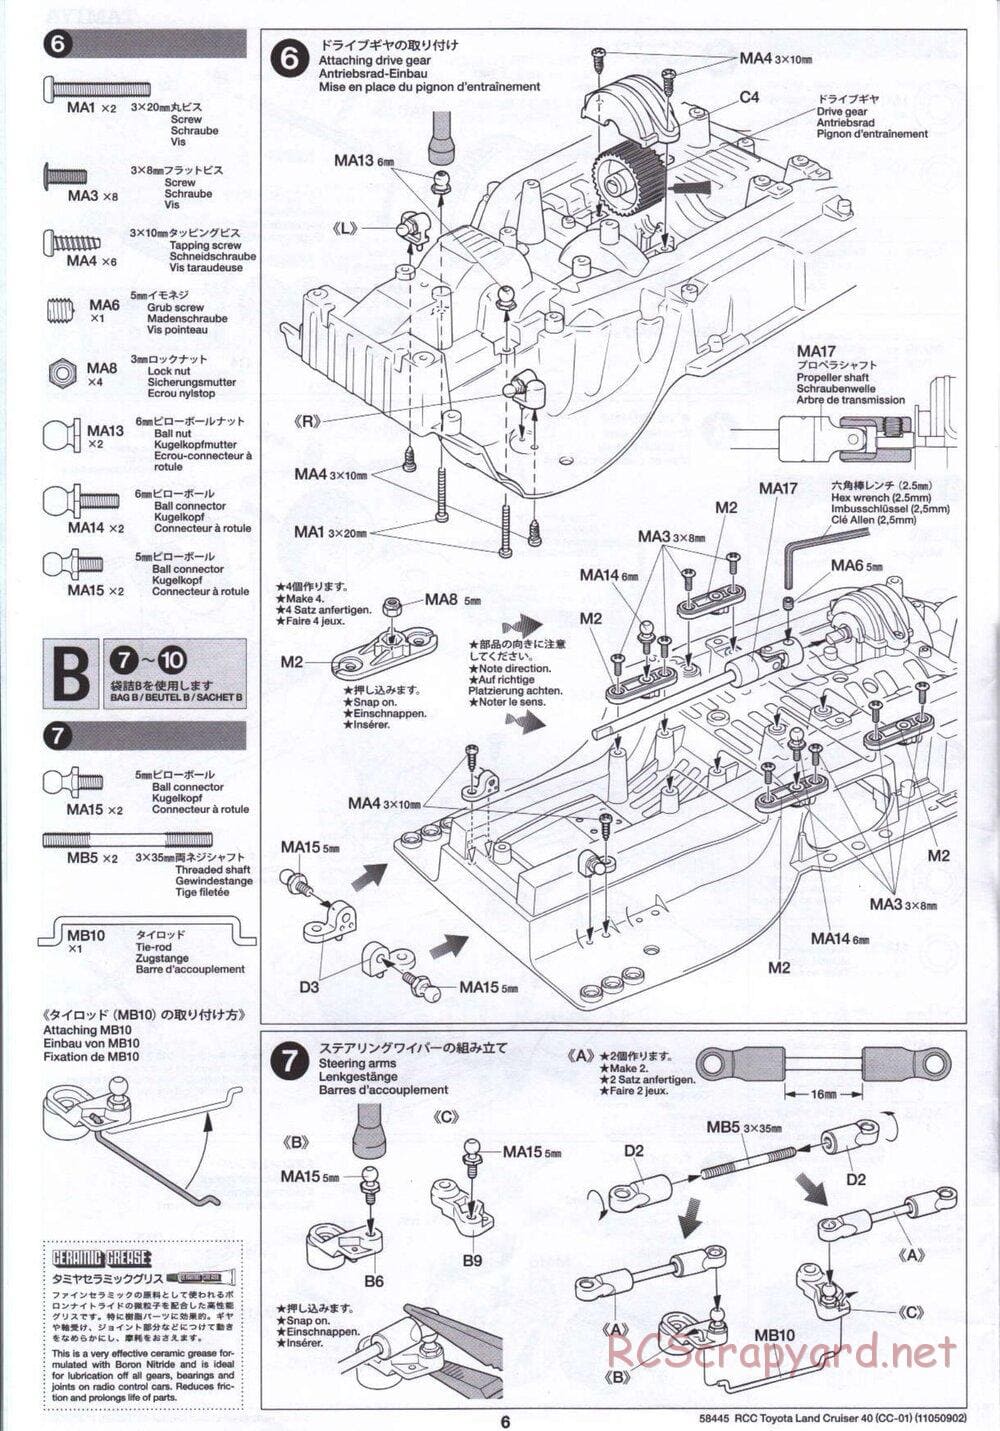 Tamiya - Toyota Land Cruiser 40 - CC-01 Chassis - Manual - Page 6